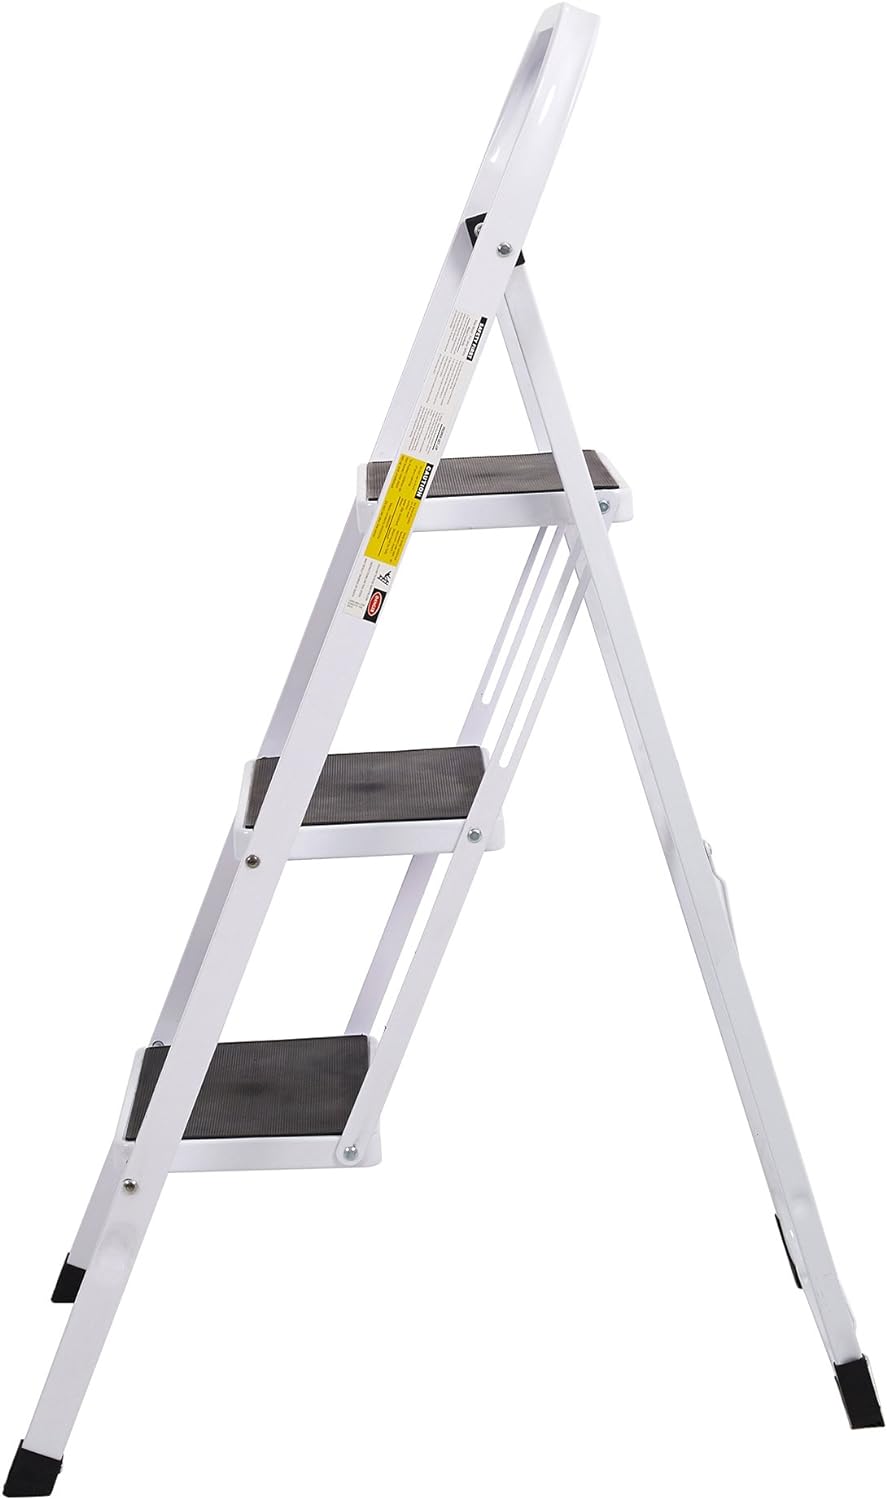 2 Step Non-Slip Aluminum Ladder Folding Platform Stool with 330 lbs Capacity